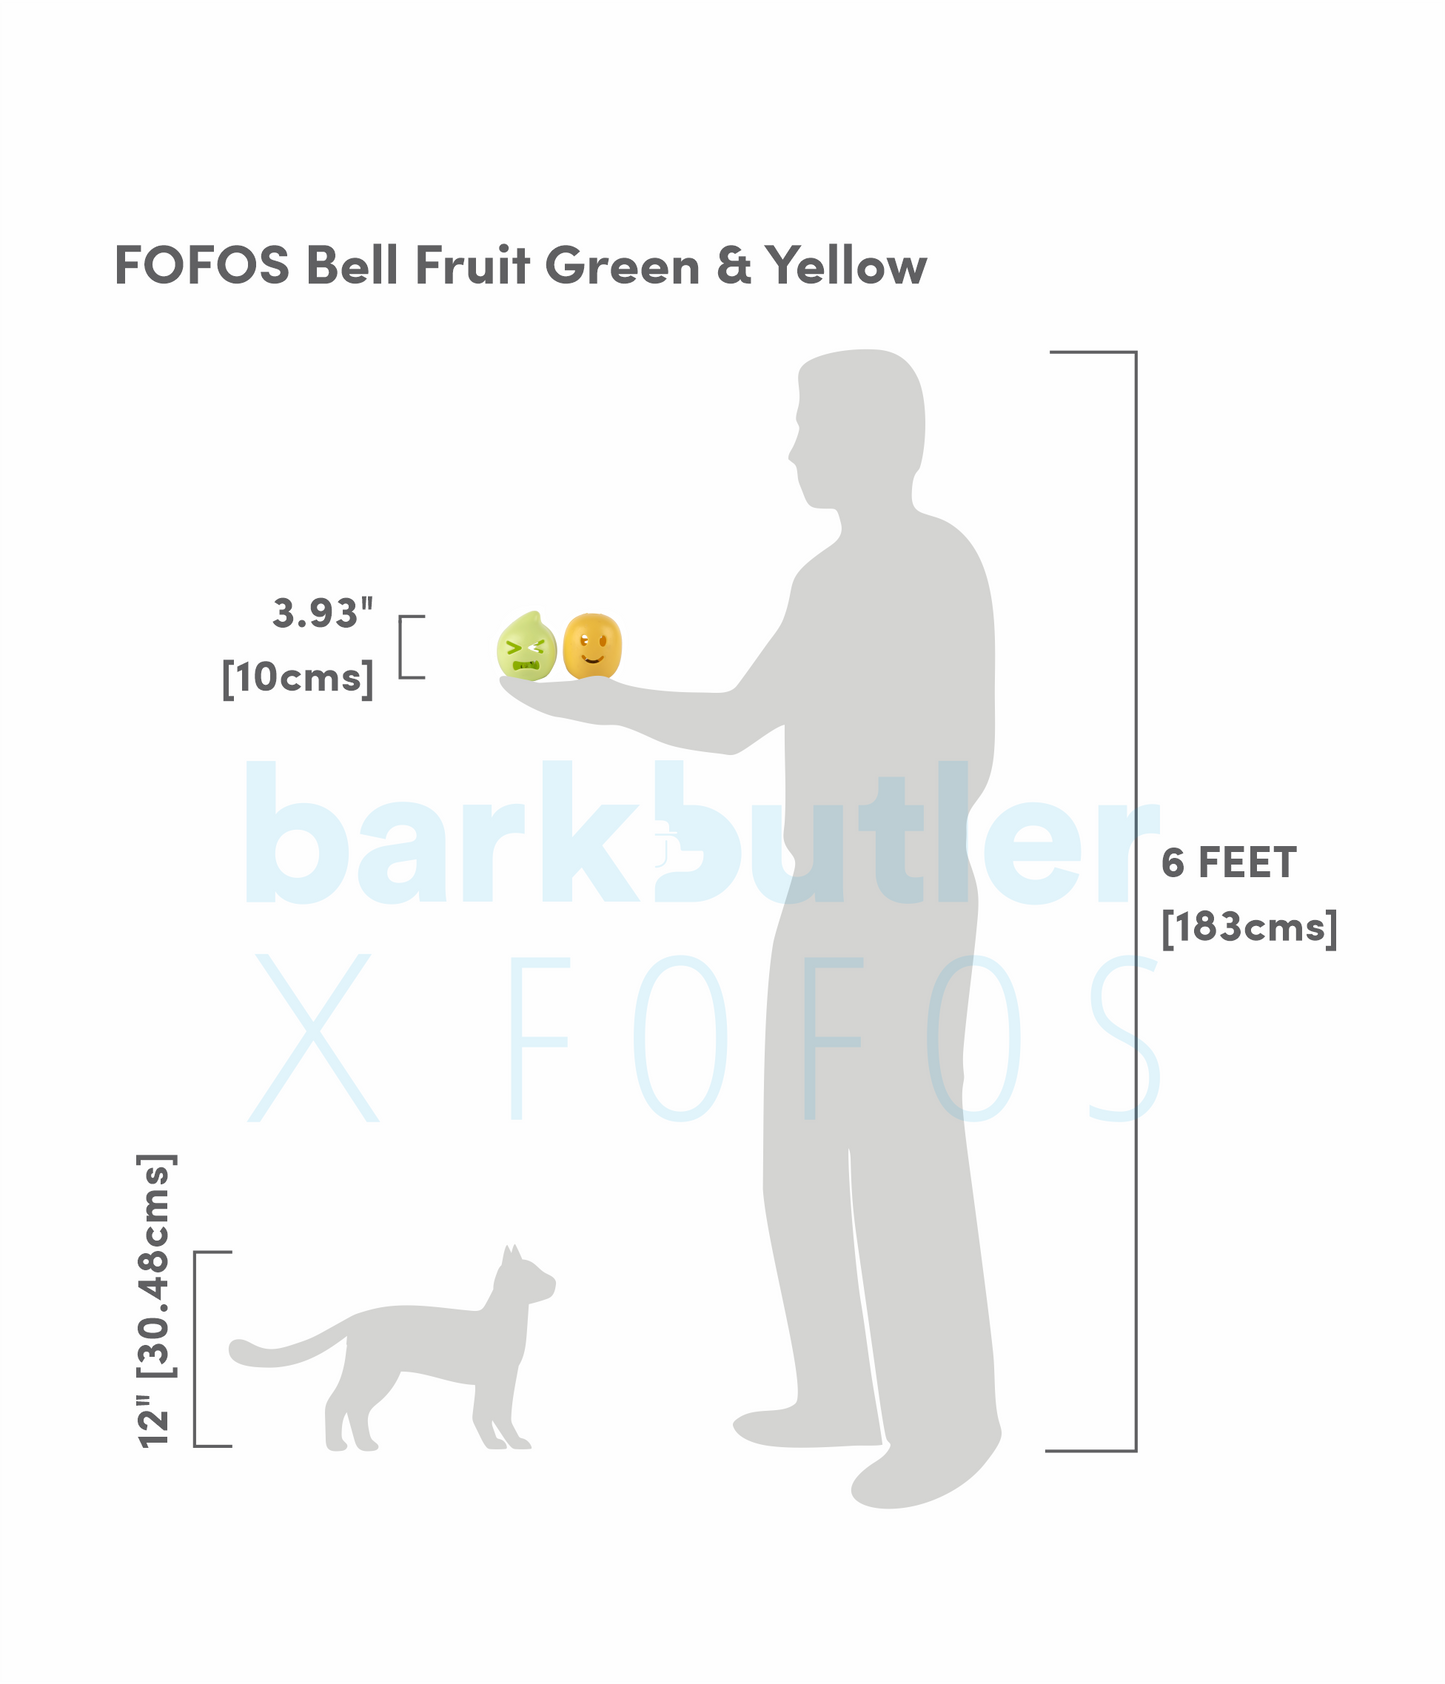 Fofos Bell Fruit Green & Yellow